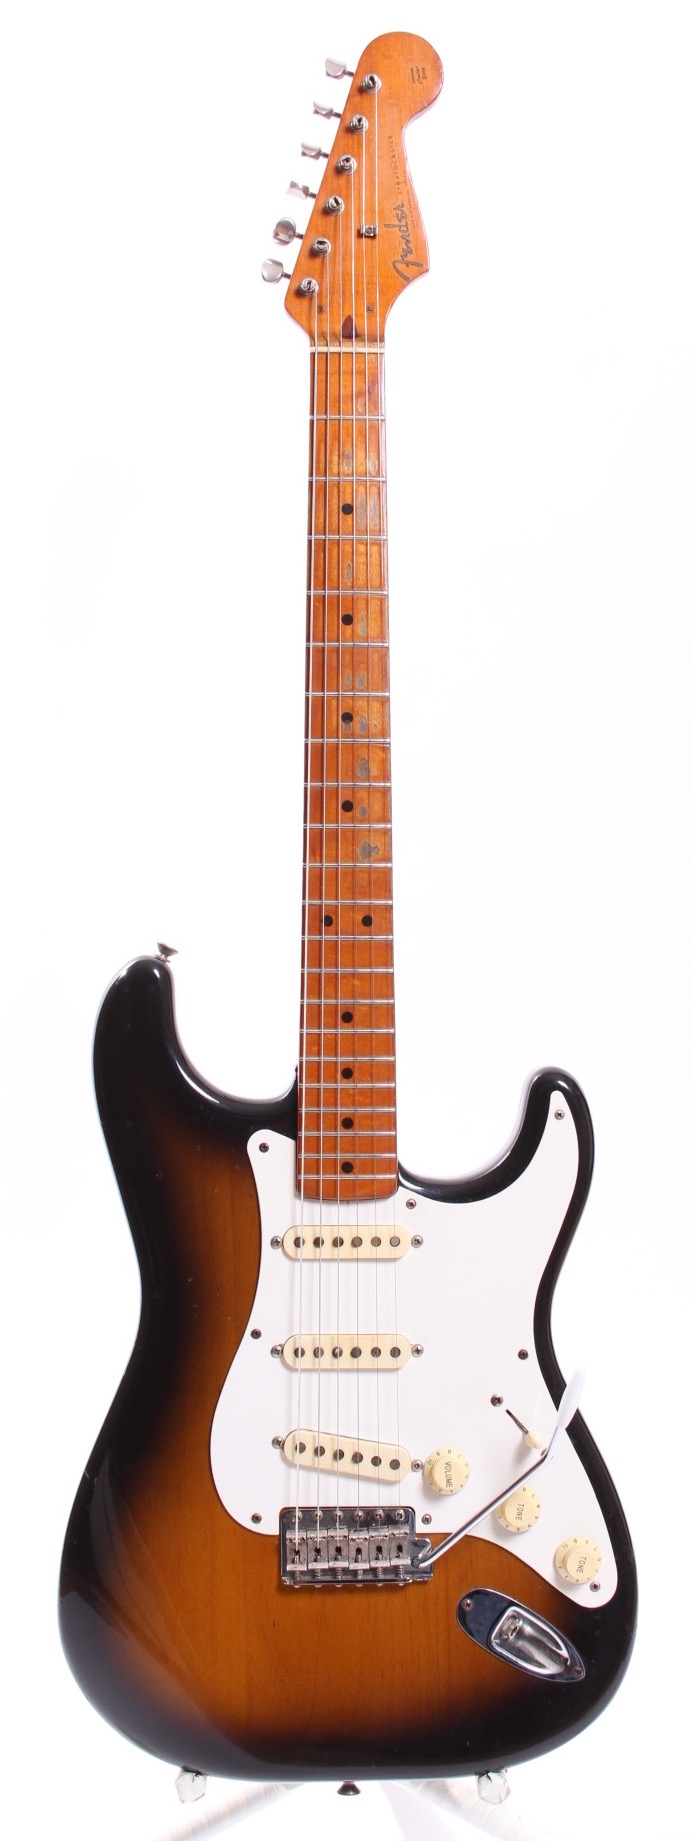 Vintage Reissue Stratocaster 112